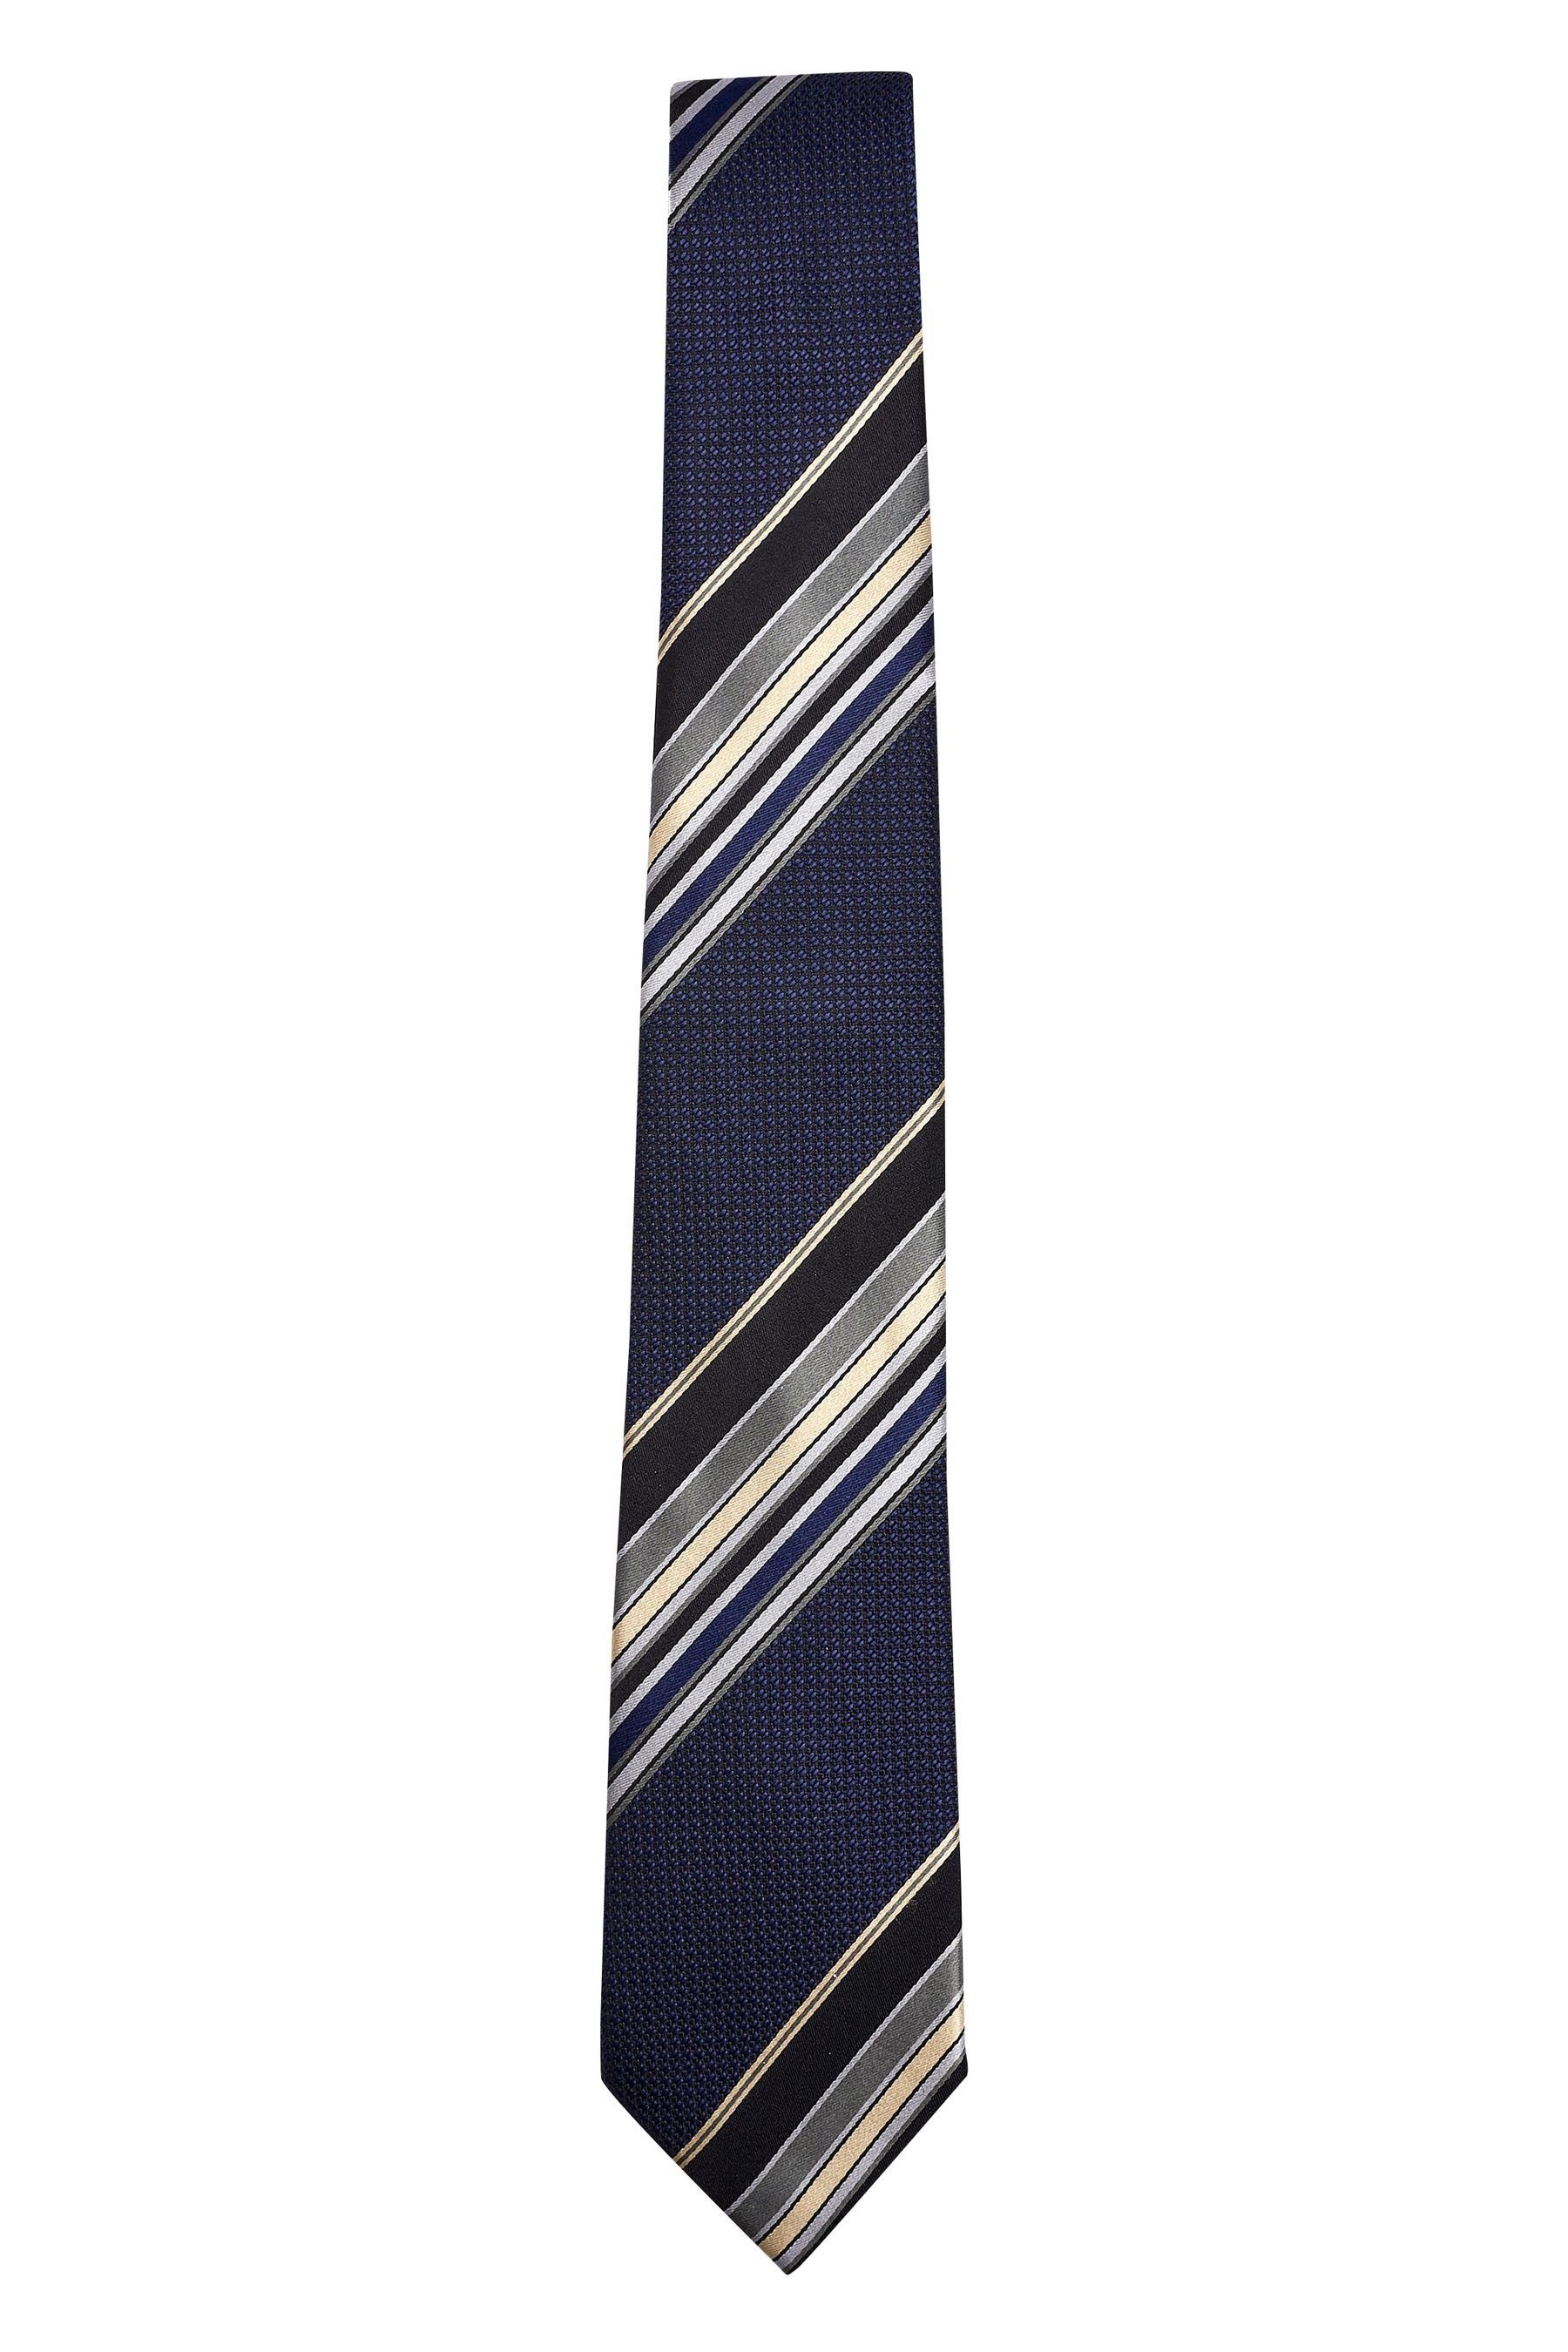 Next Krawatte Gestreifte Seidenkrawatte, Blue Navy (1-St) breit